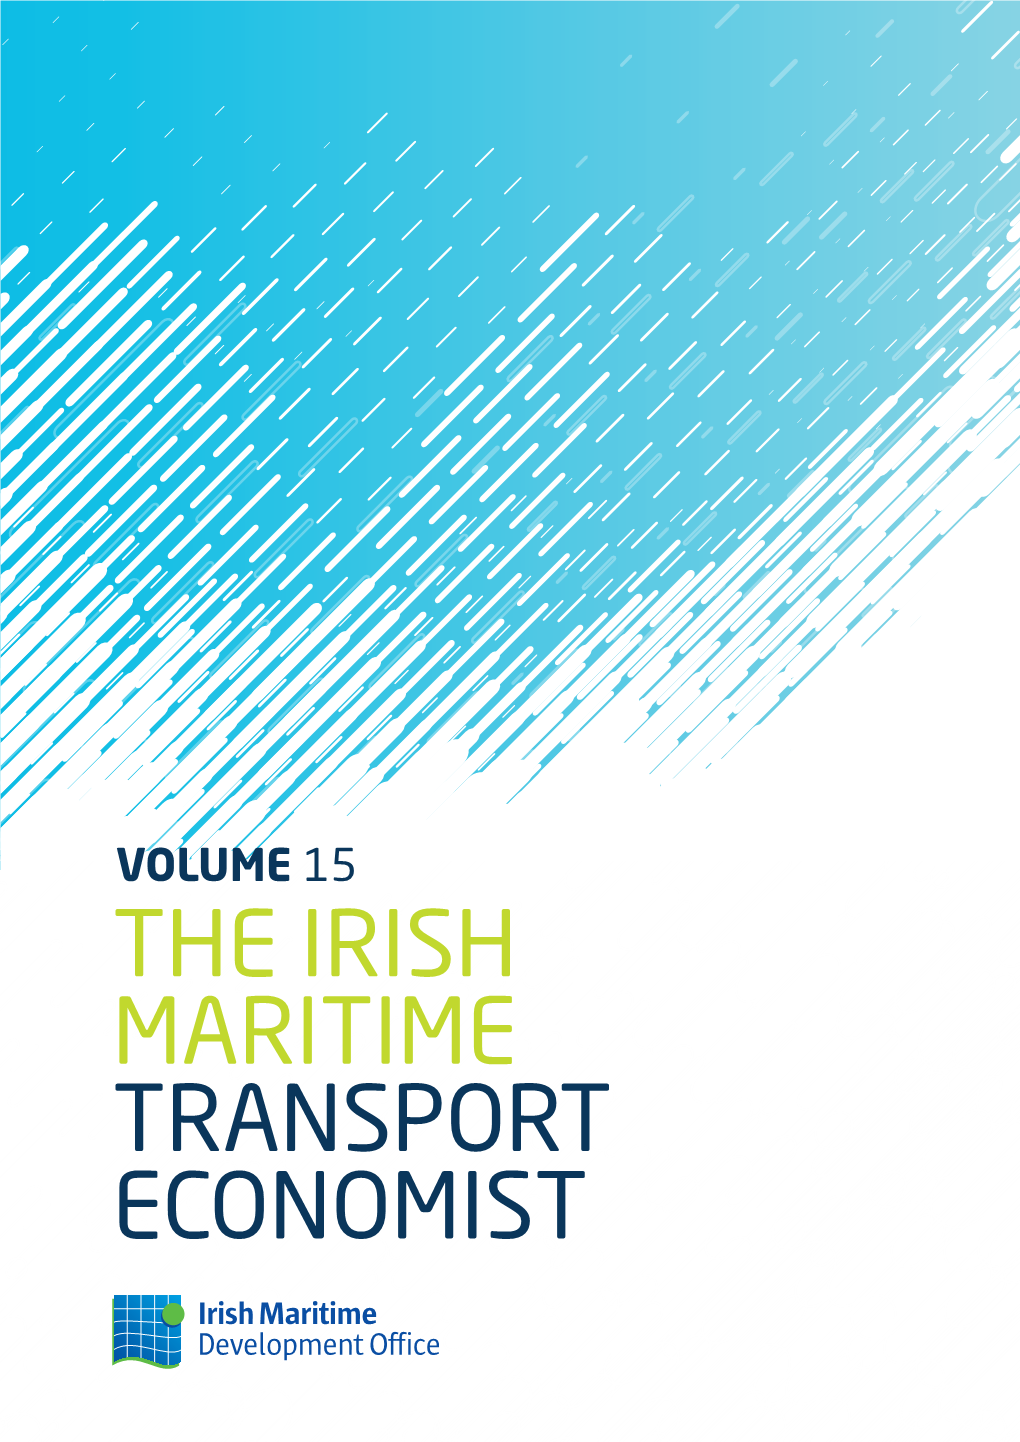 THE IRISH MARITIME TRANSPORT ECONOMIST the Irish Maritime Development Office